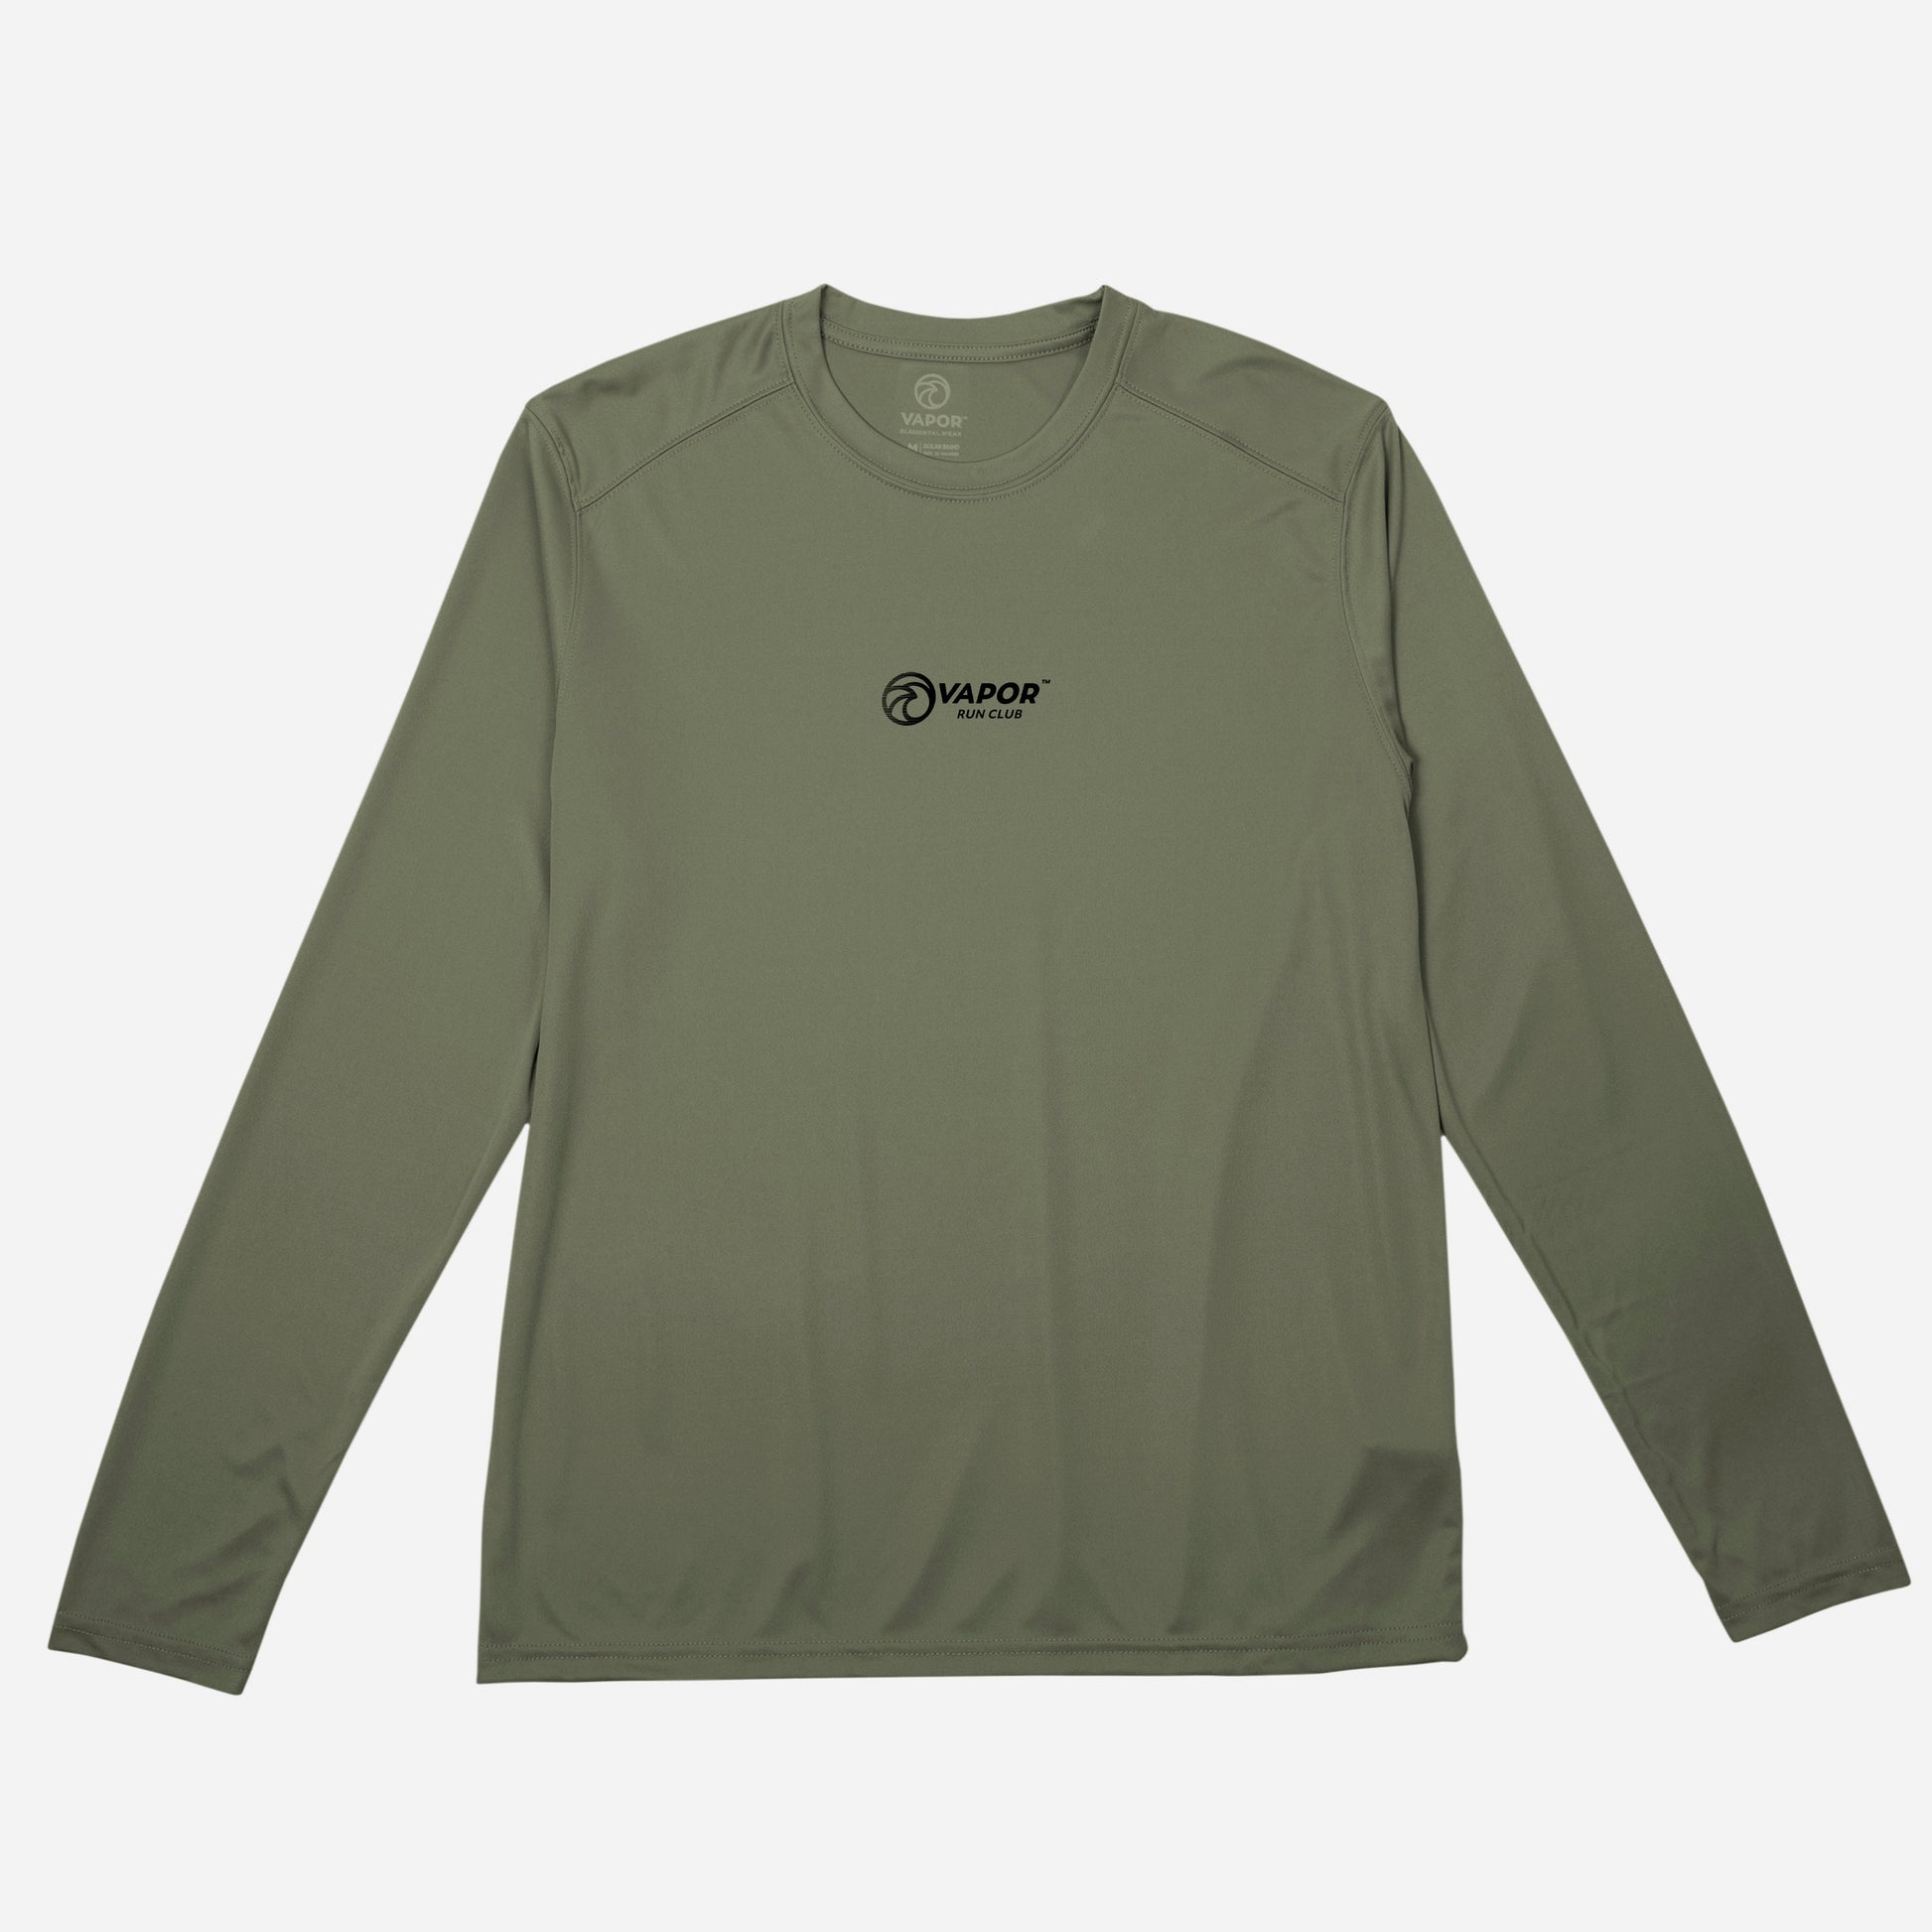 Eco UPF Sun Shirt in Clay – Sol Playwear